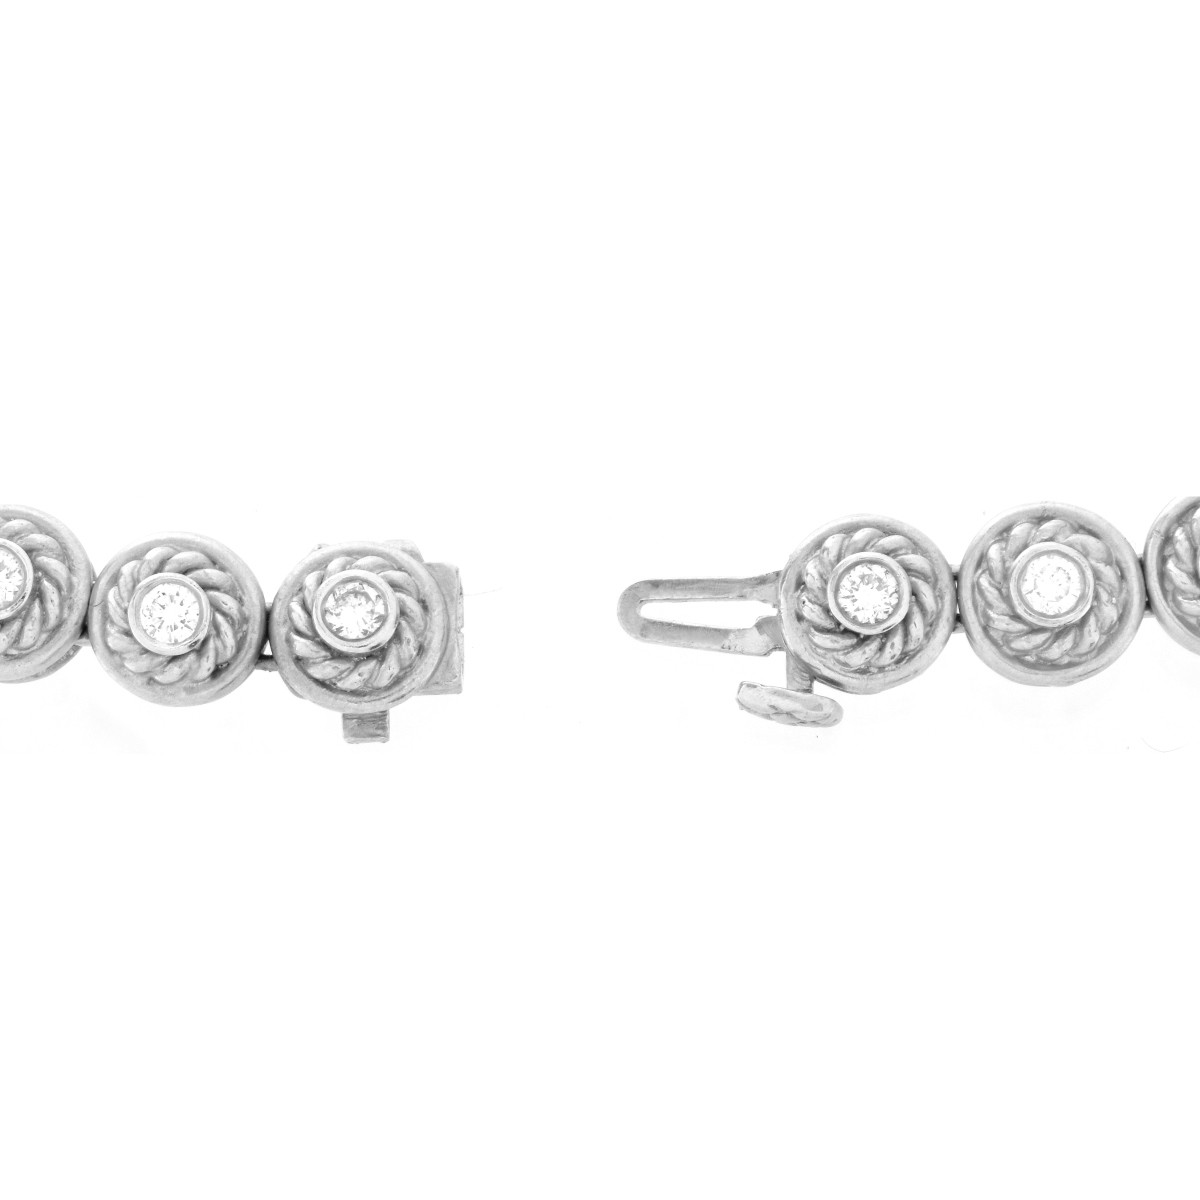 Ruby, Diamond, Platinum and 18K Pendant Necklace